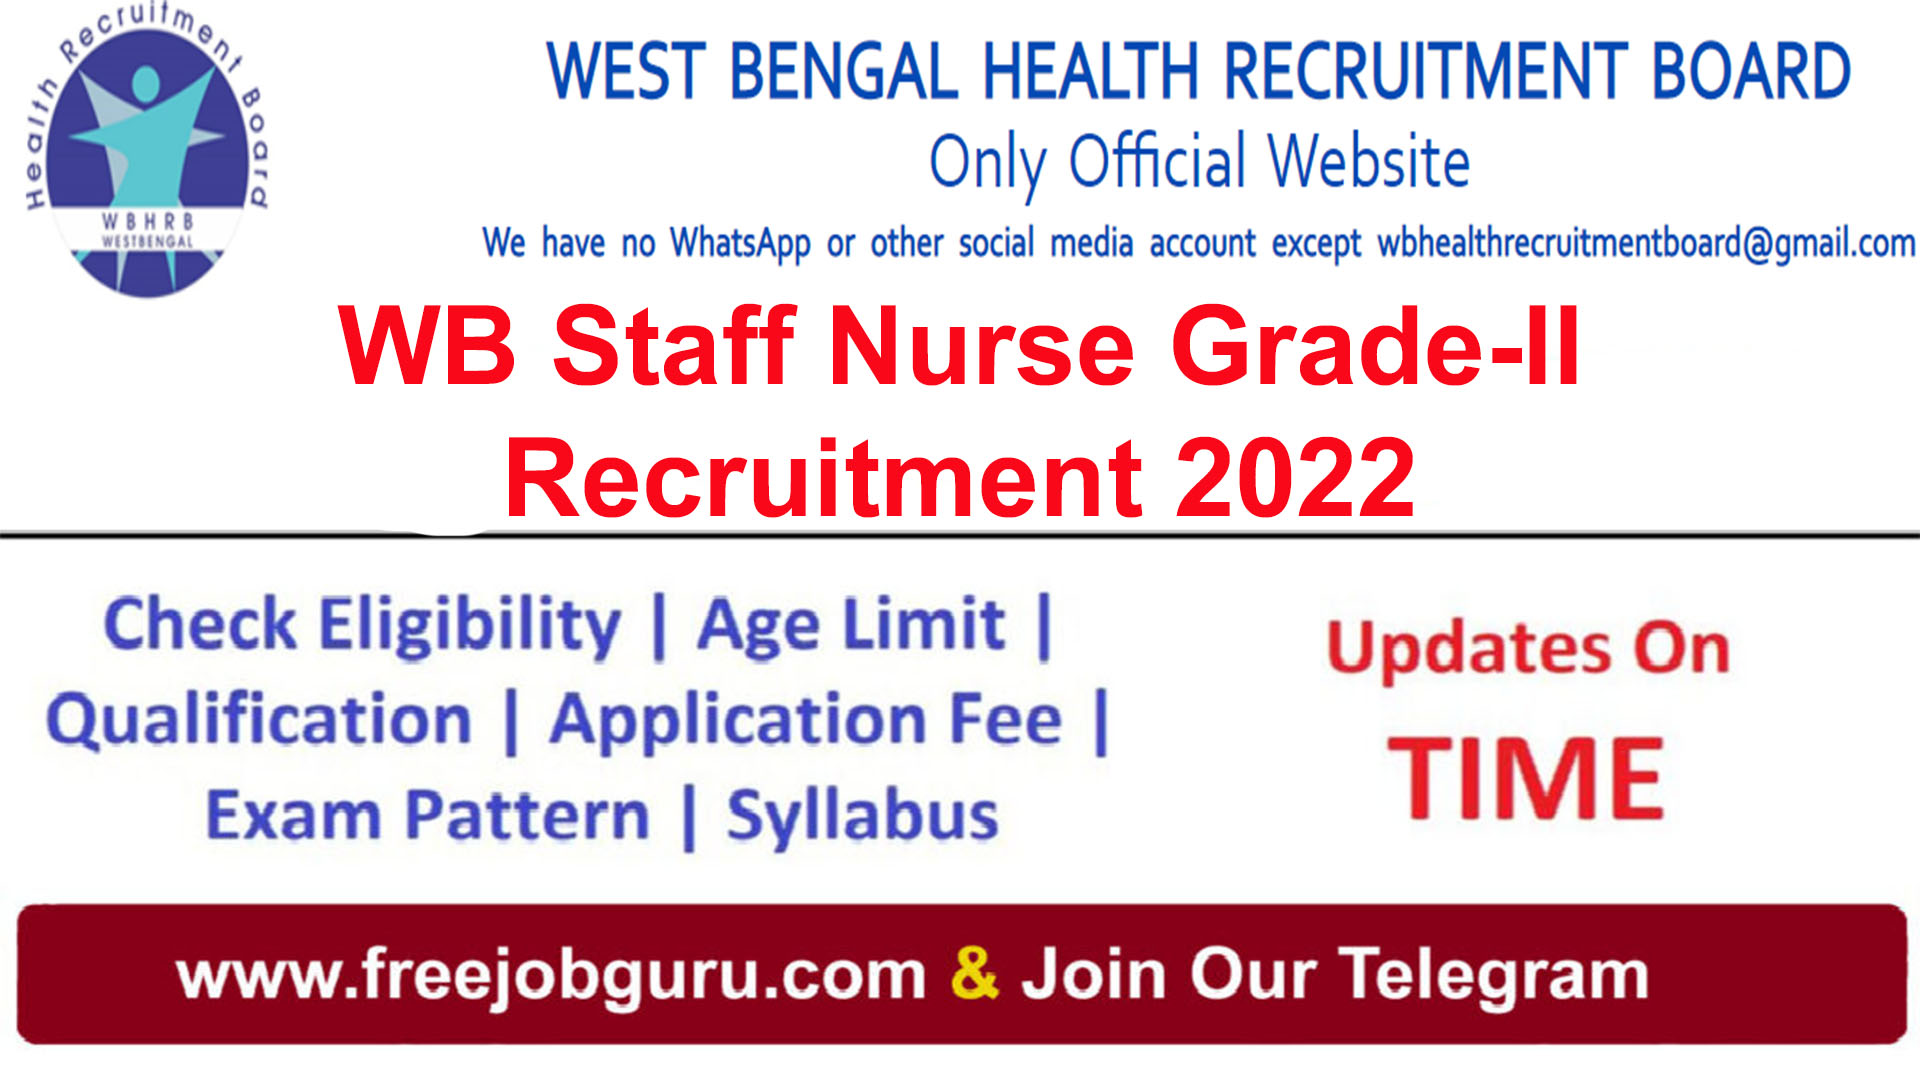 WB Staff Nurse Grade-II Recruitment 2022